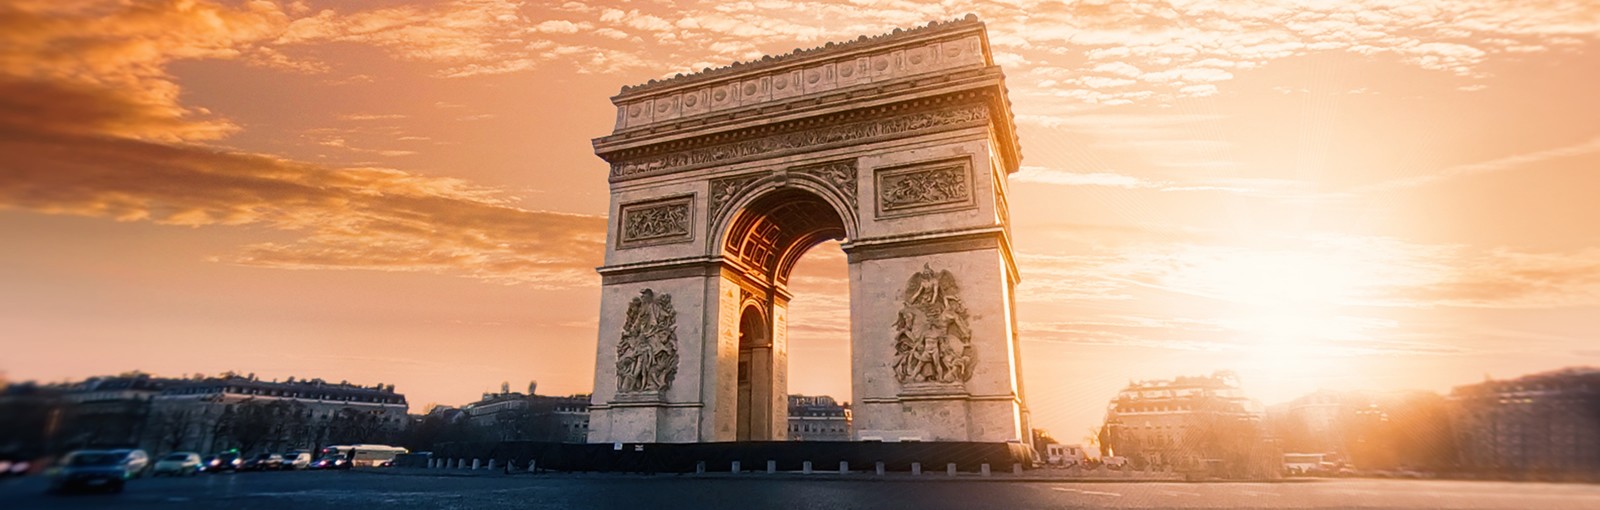 Tours Paquete a medida: Paris - Louvre - Torre Eiffel - Versalles para Ernesto Sarabia Feb.13 y 14; 2023 - Tours de ciudad - Visitas de Paris